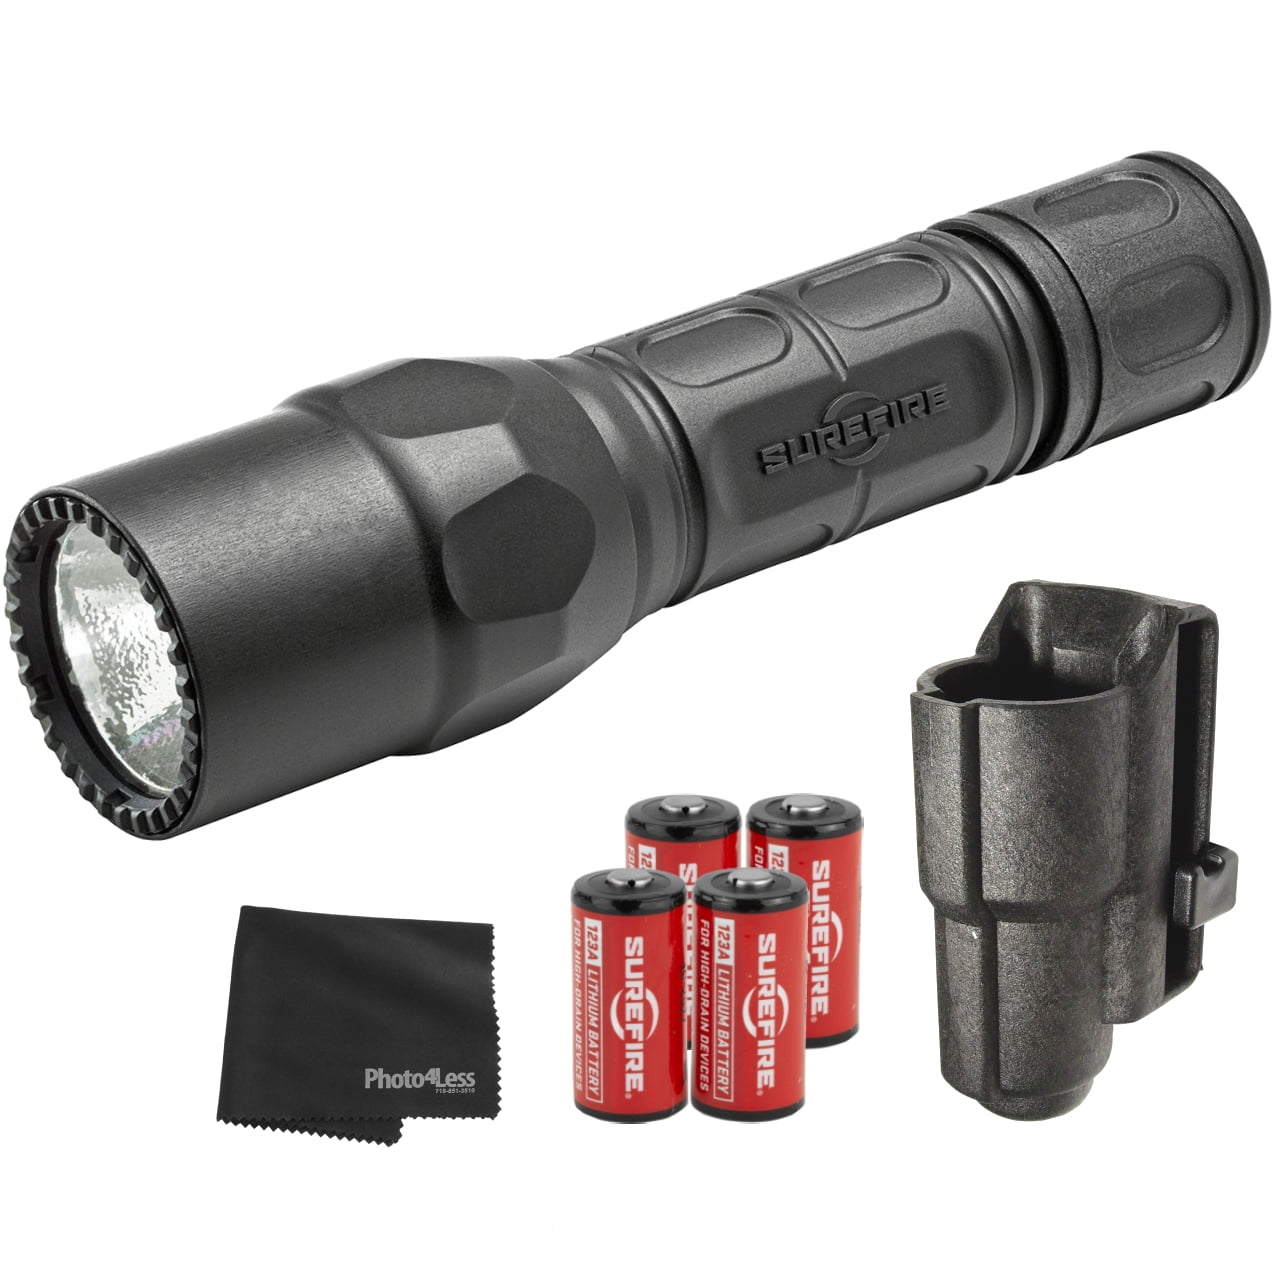 SureFire G2X Law Enforcement Edition Dual-Output LED Flashlight 600  Lumens Additional SureFire Batteries, SureFire Speed Holster and Lens  Cloth